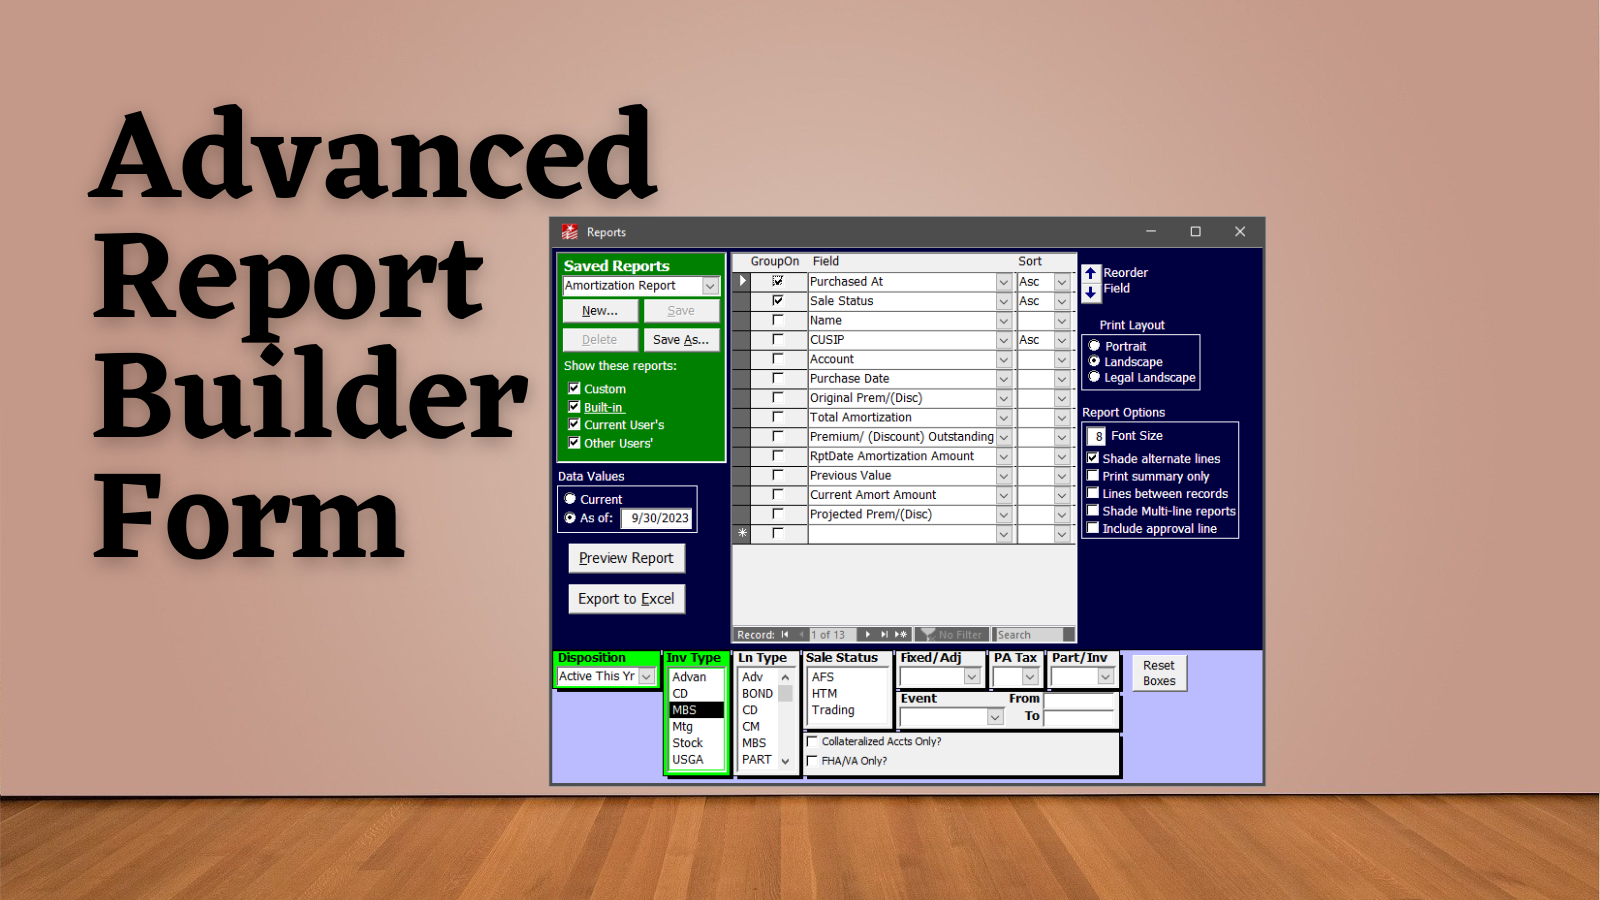 Advanced Report Builder Form